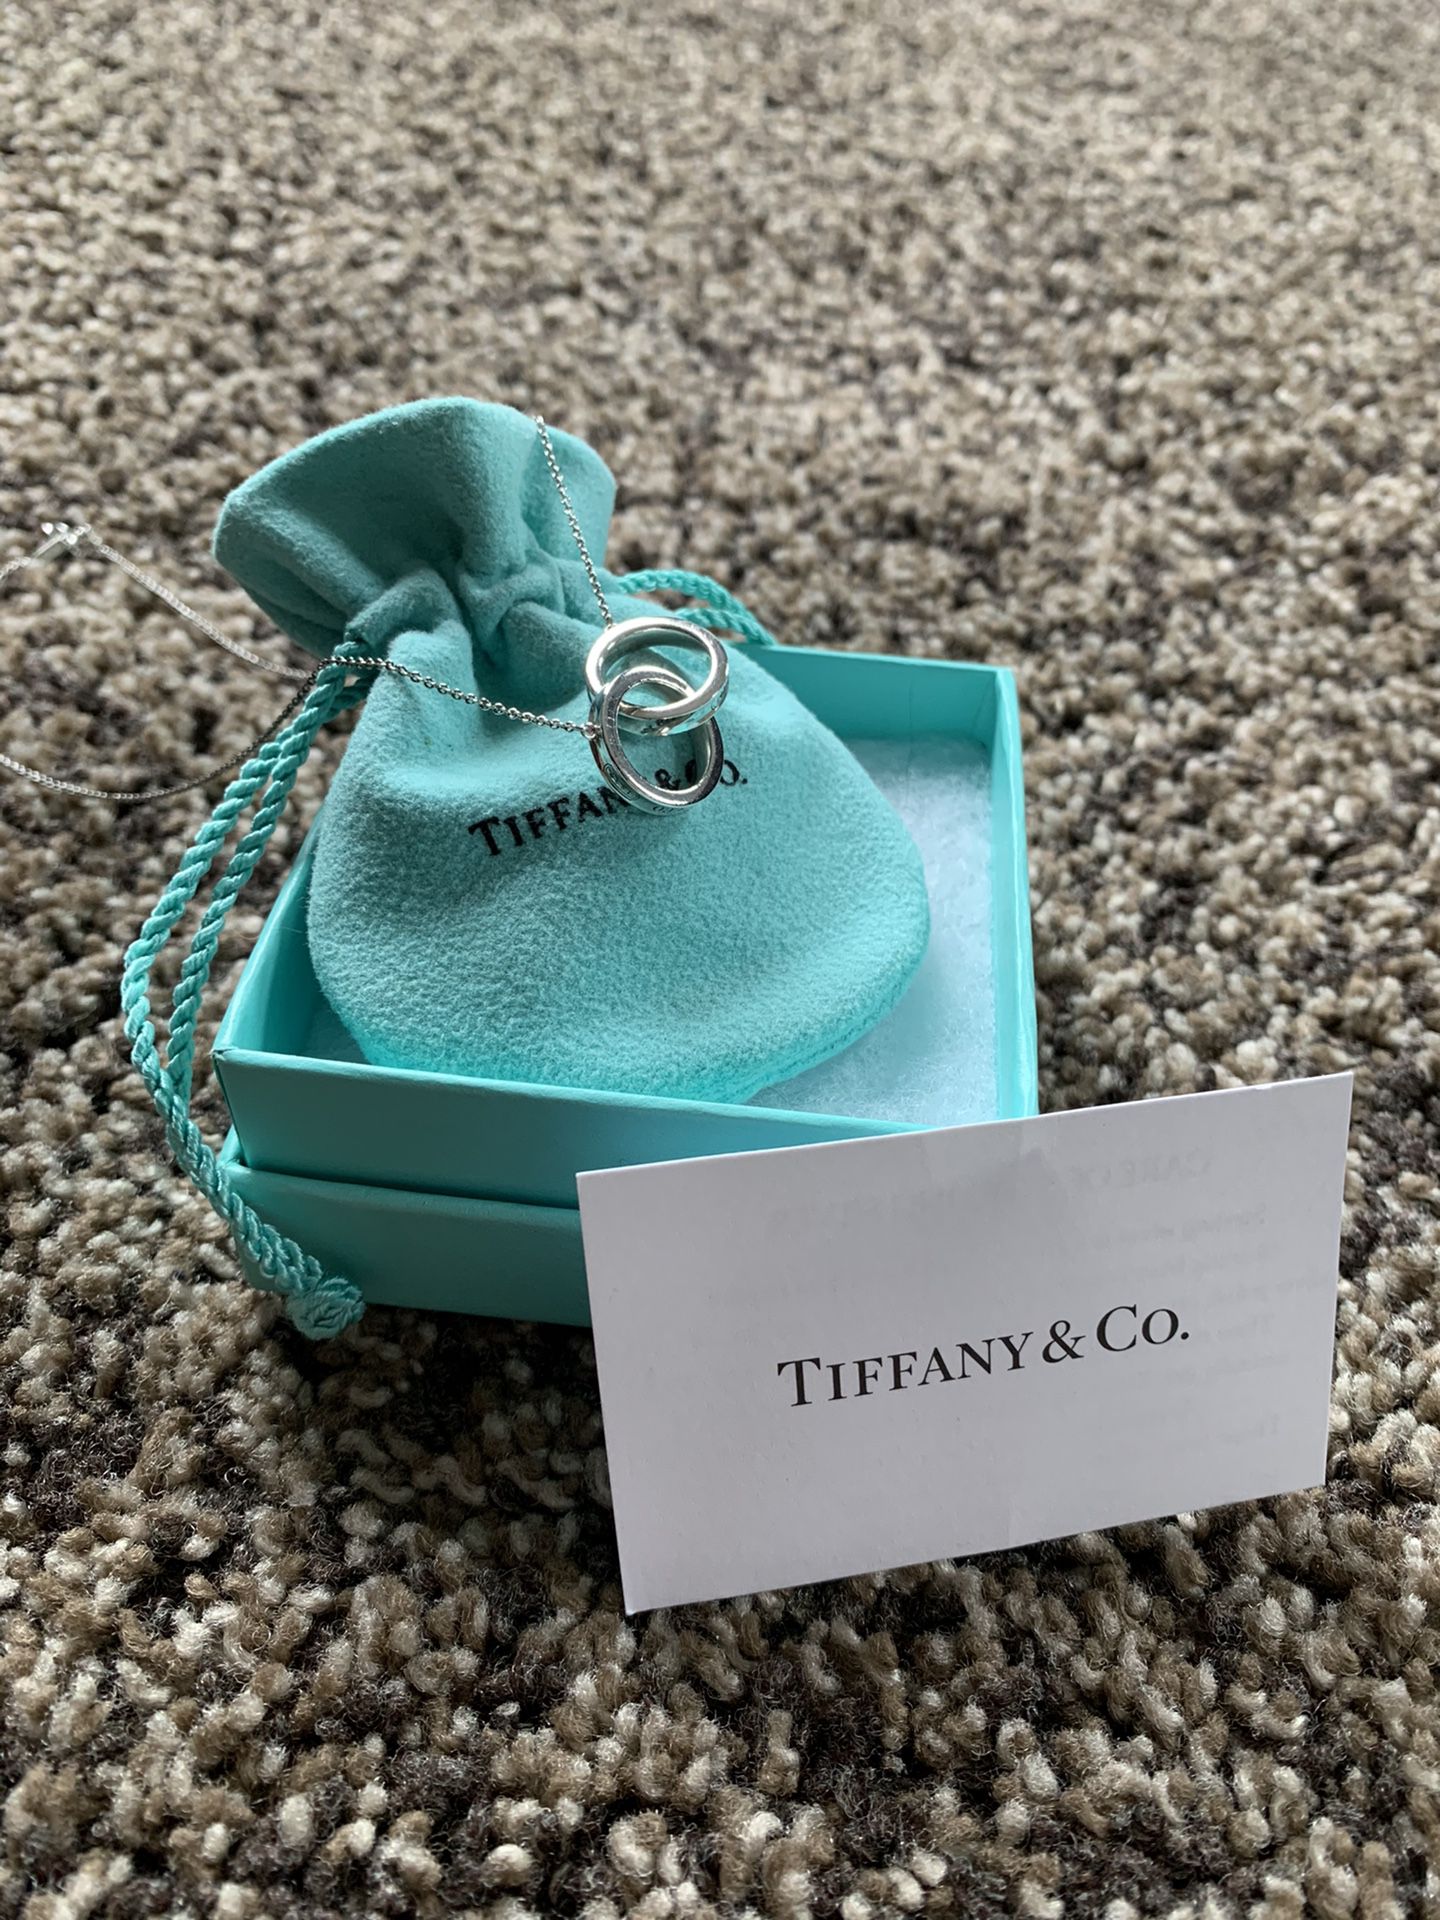 Tiffany & Co. Interlocking Rings Pendant Necklace (16”)